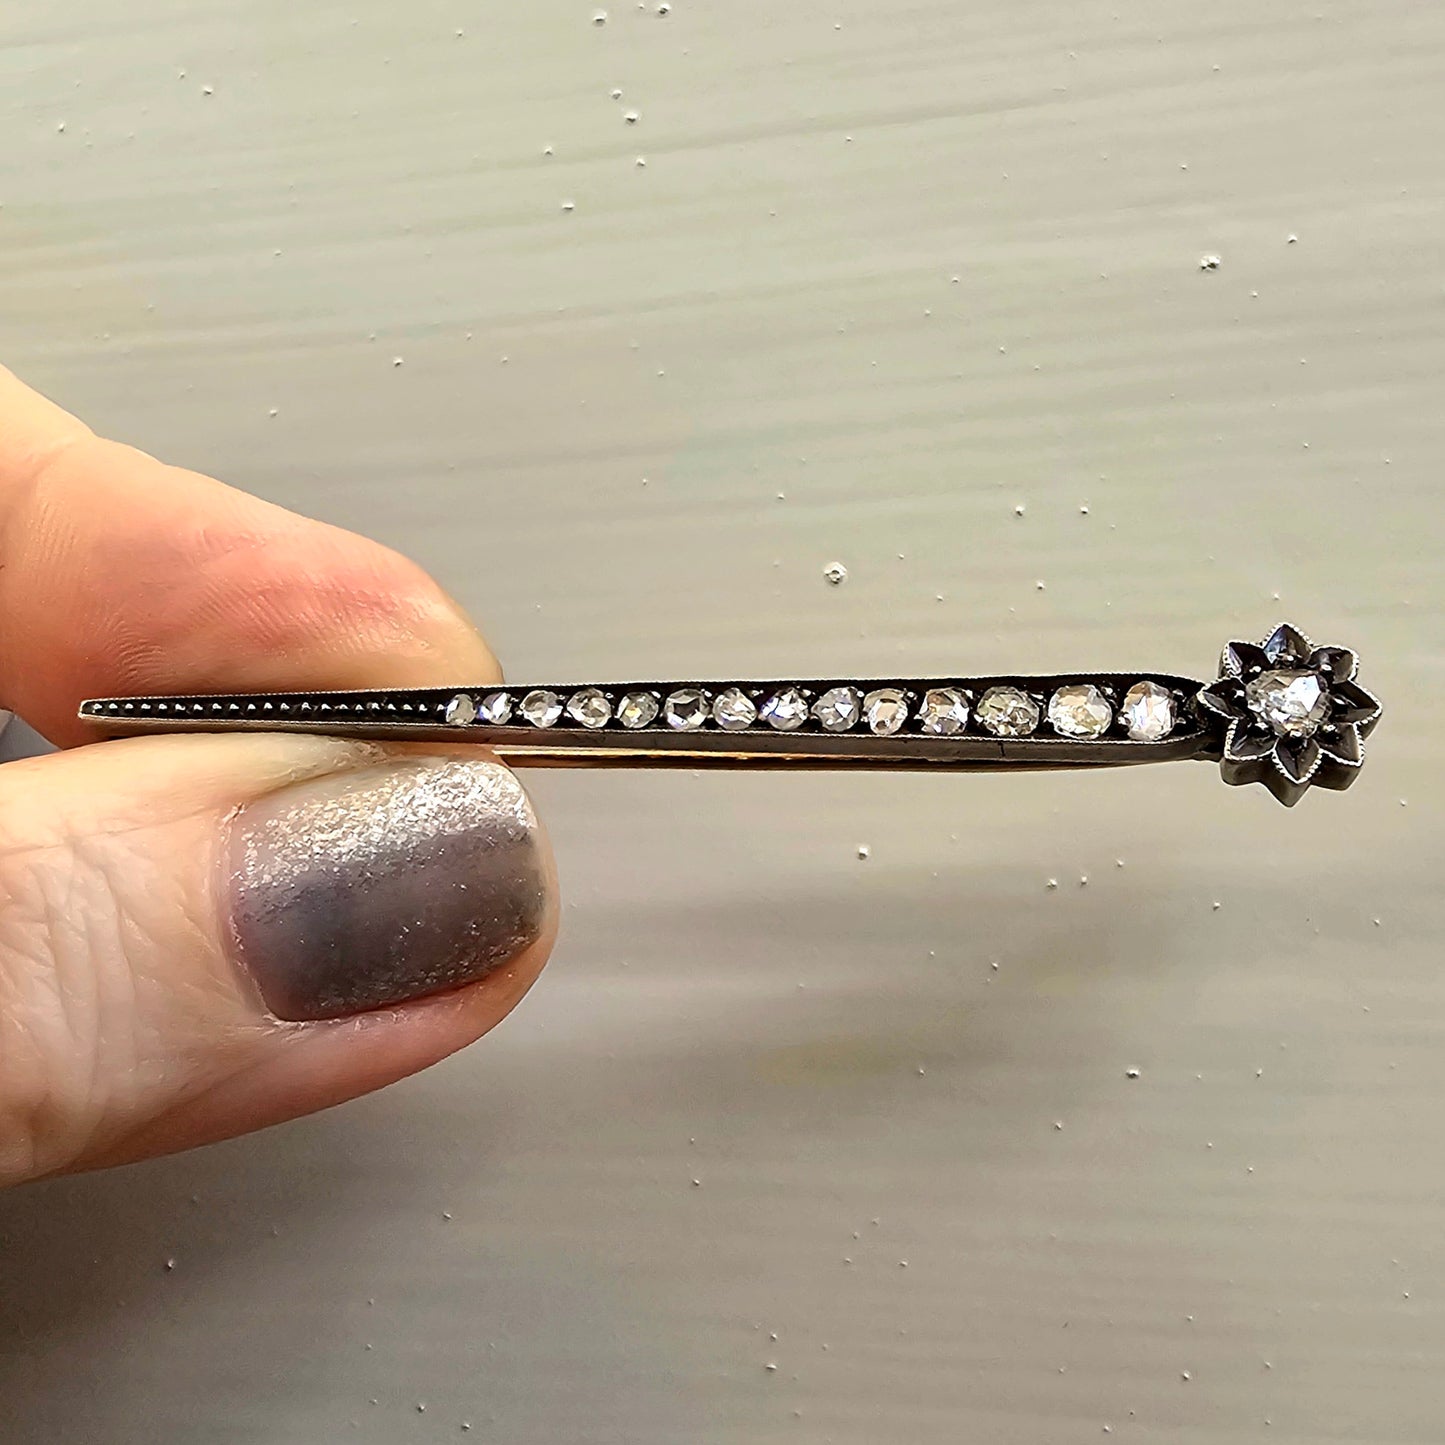 Edwardian magical wand pin with rose cut diamonds